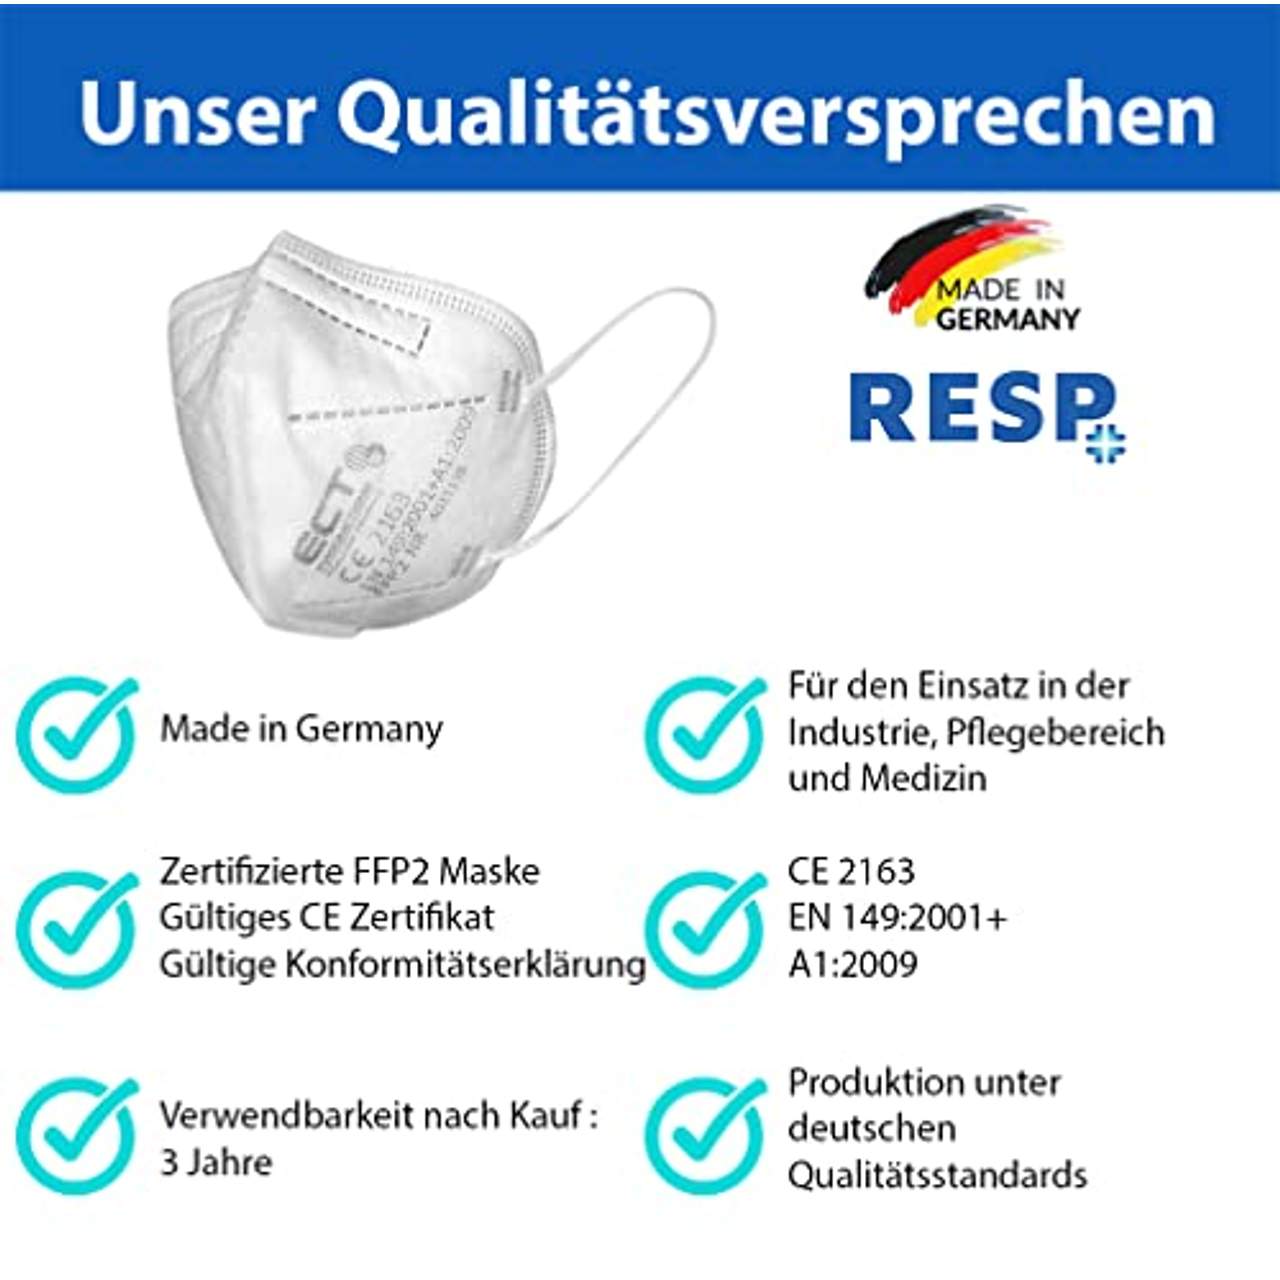 RESP ECT FFP2 Masken CE Zertifiziert aus Deutschland